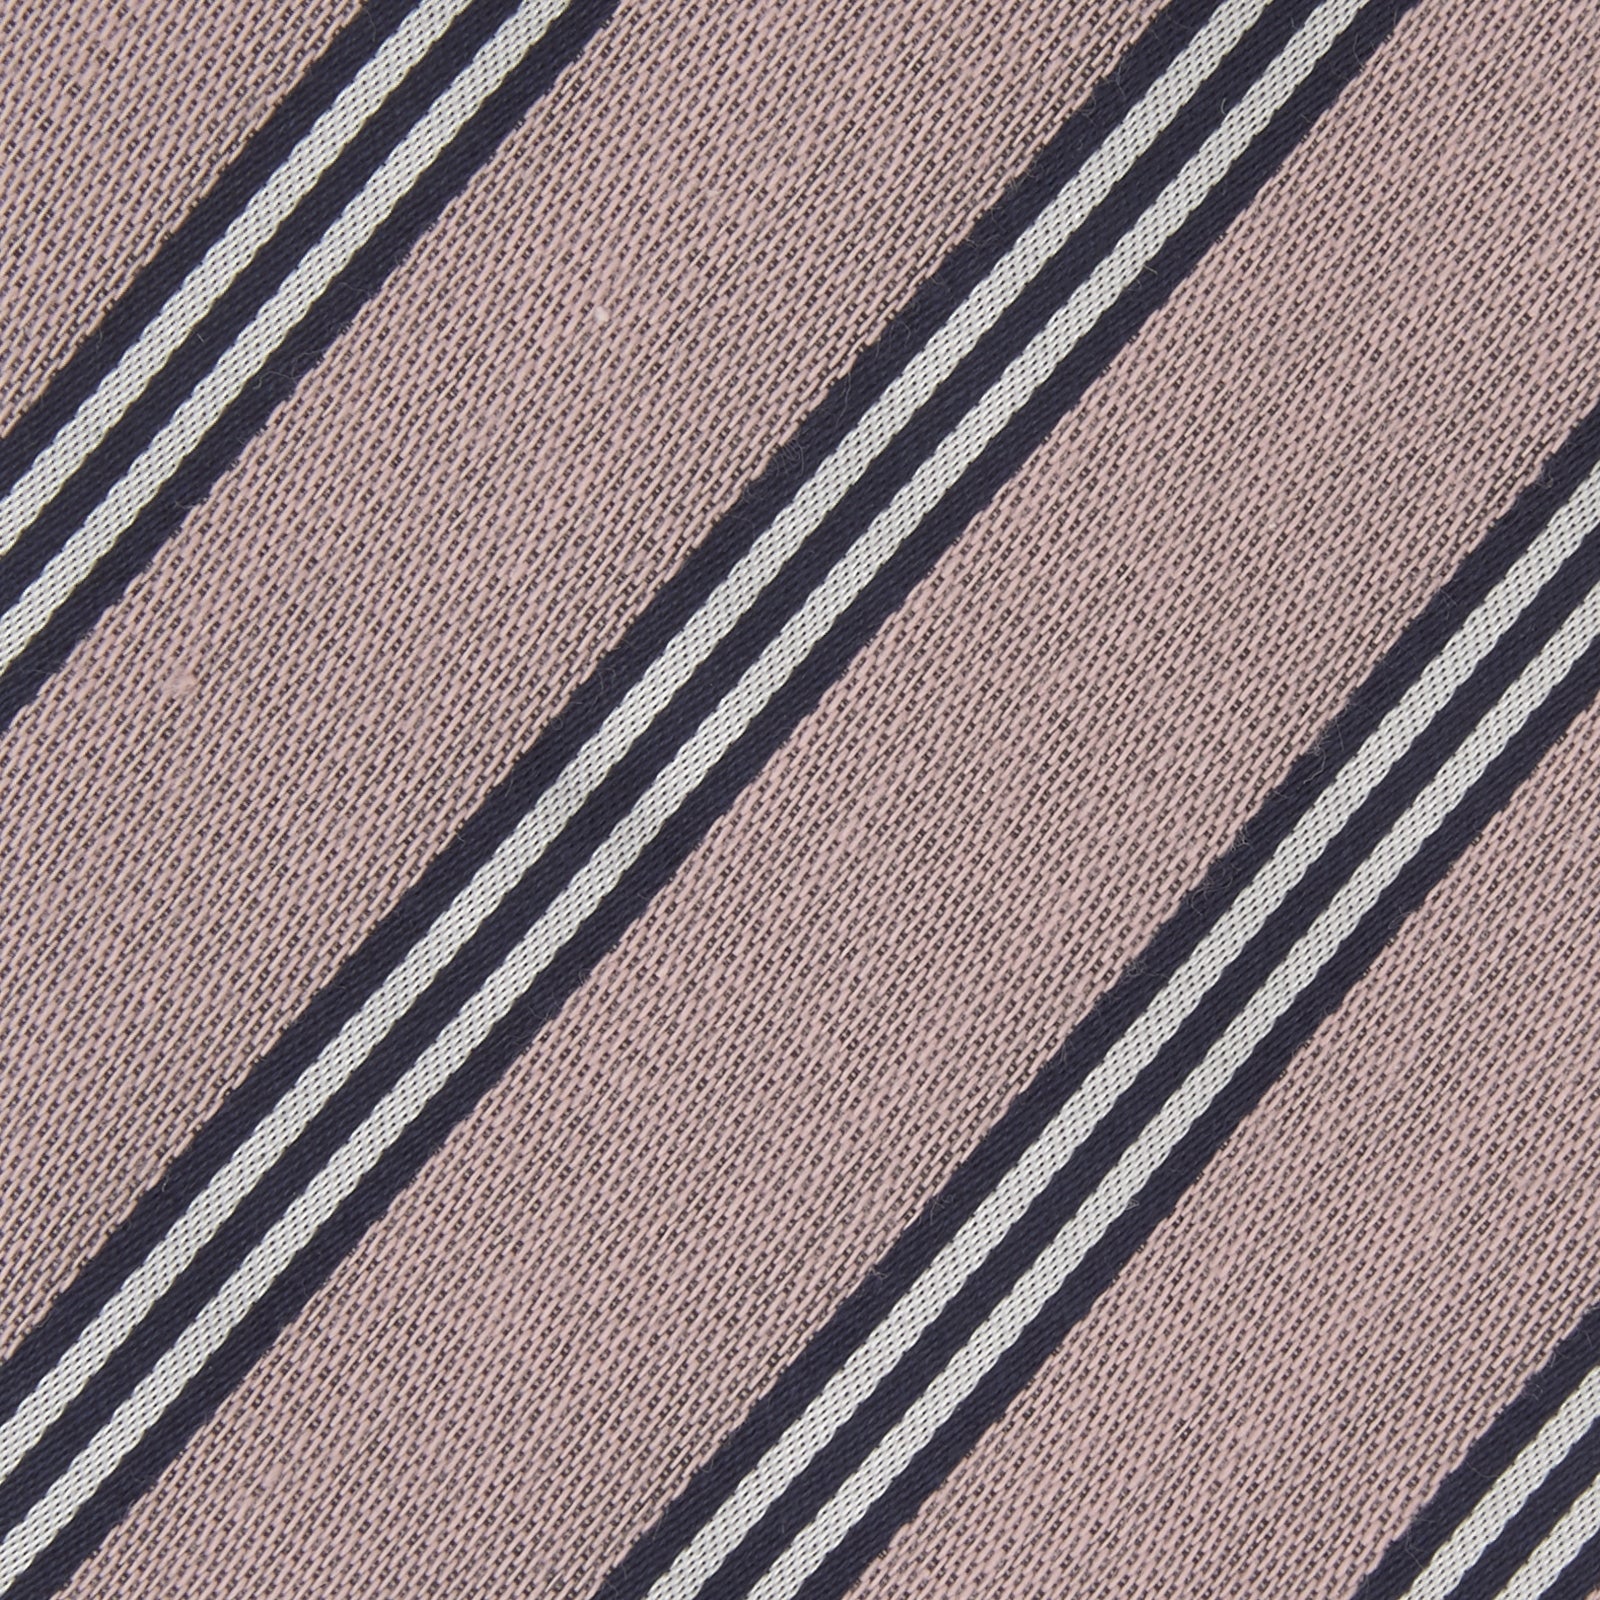 Pastel Pink Diagonal Stripe Cotton and Silk Tie